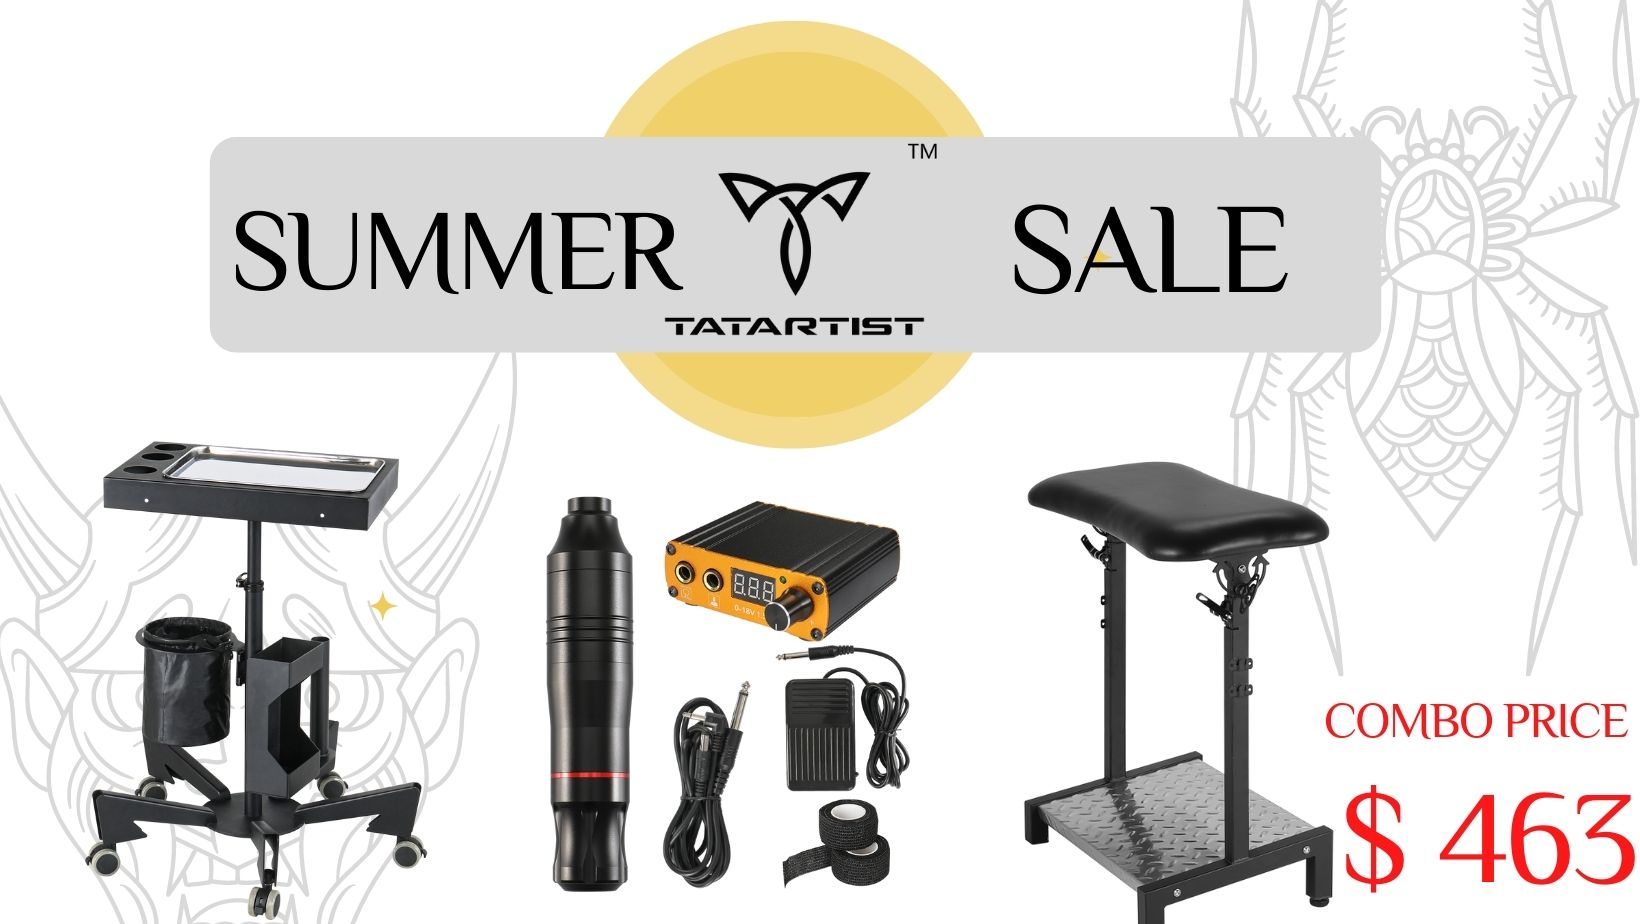 TatArtist Tattoo Supplies Summer Sale is only $463